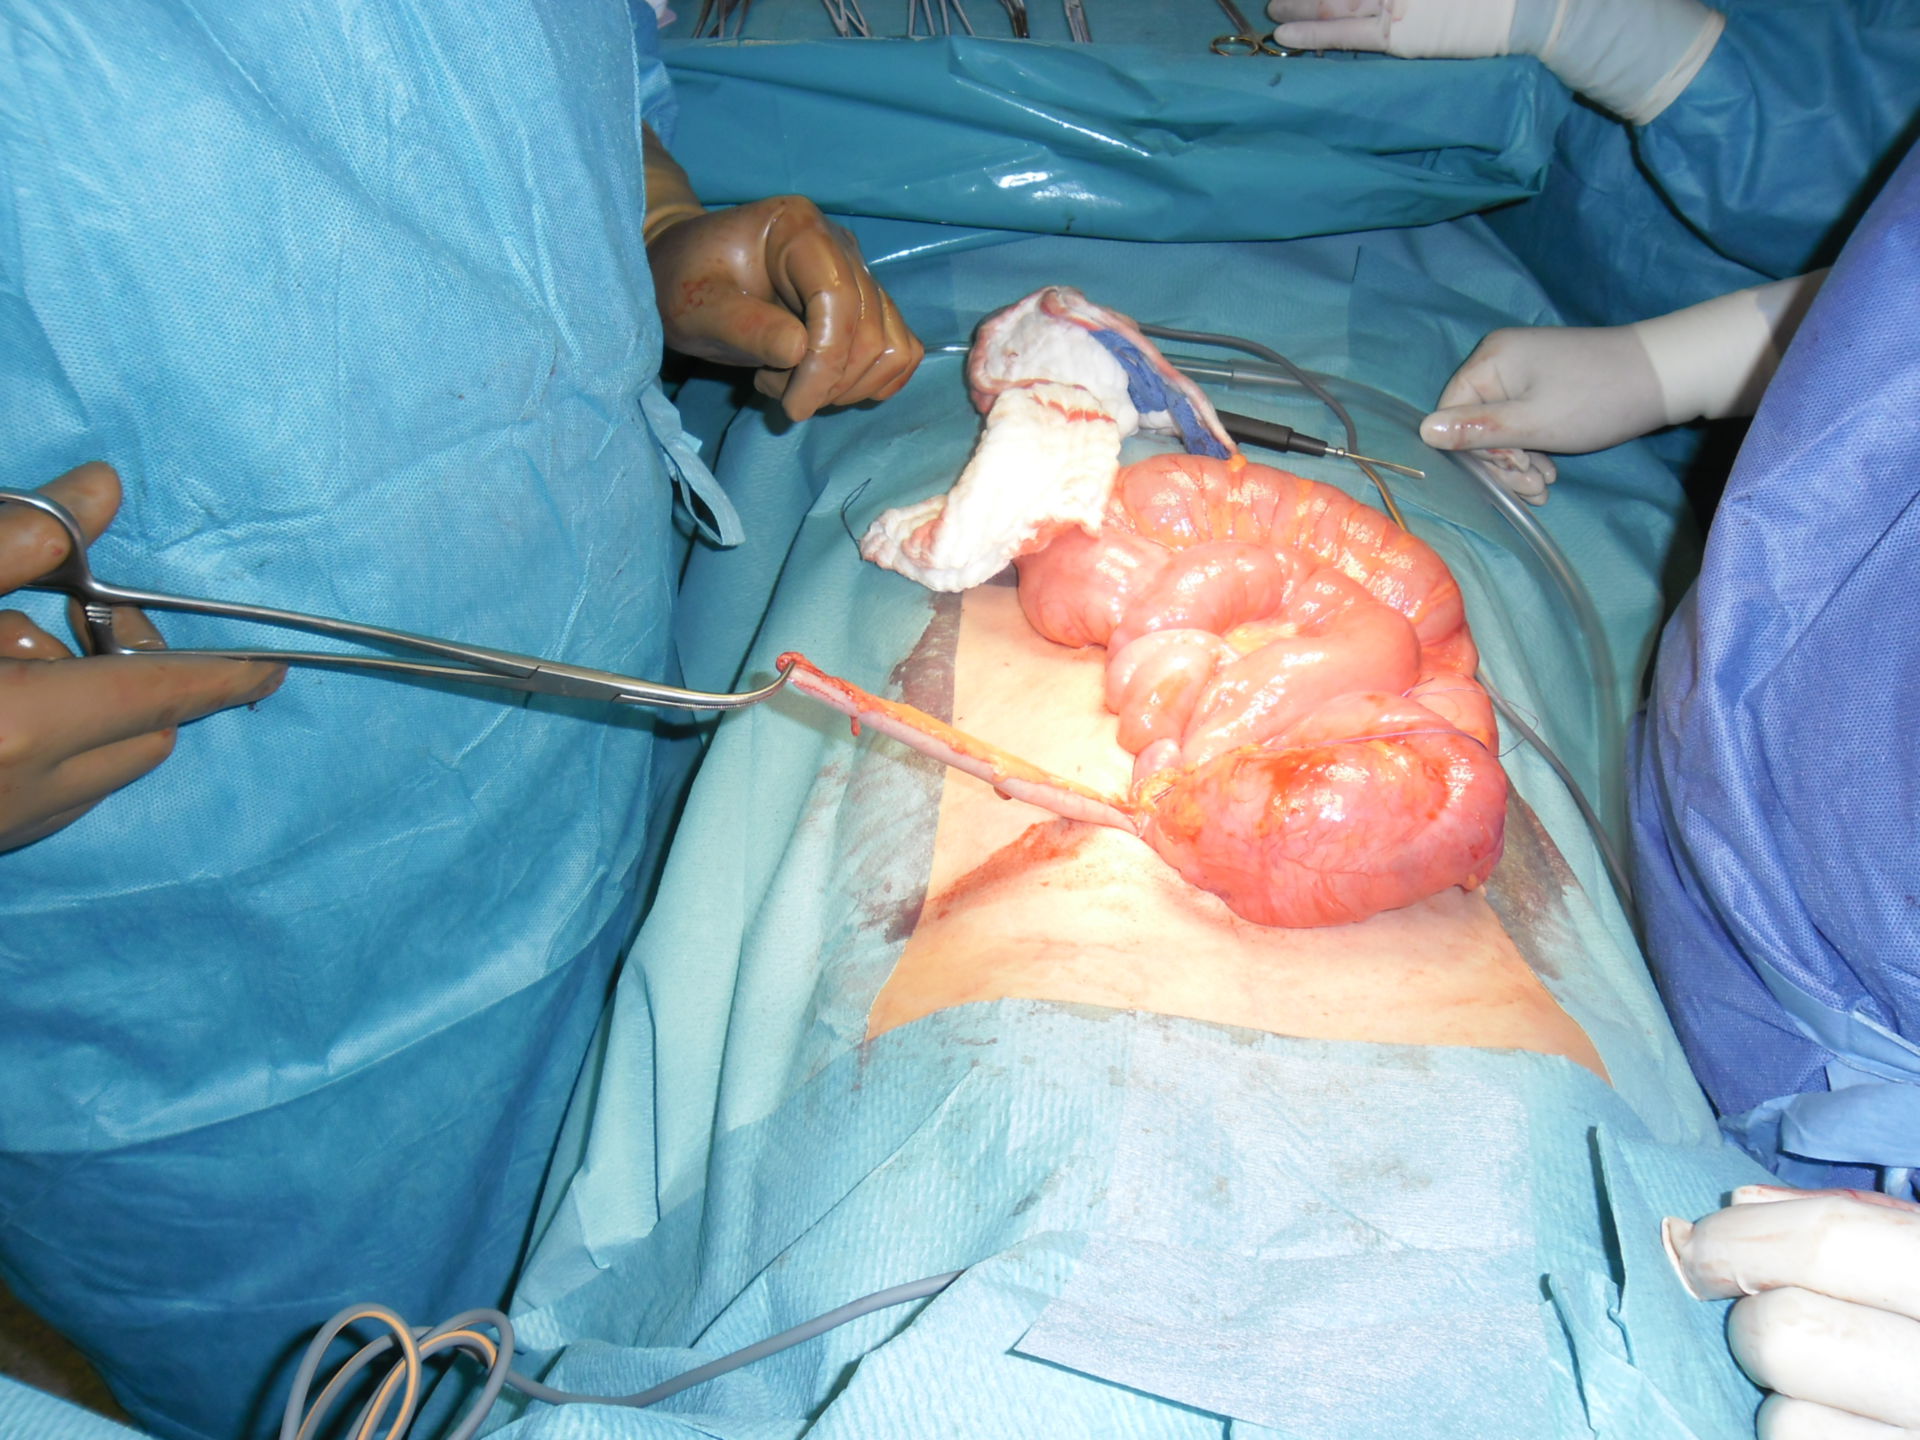 Appendix im linken Oberbauch